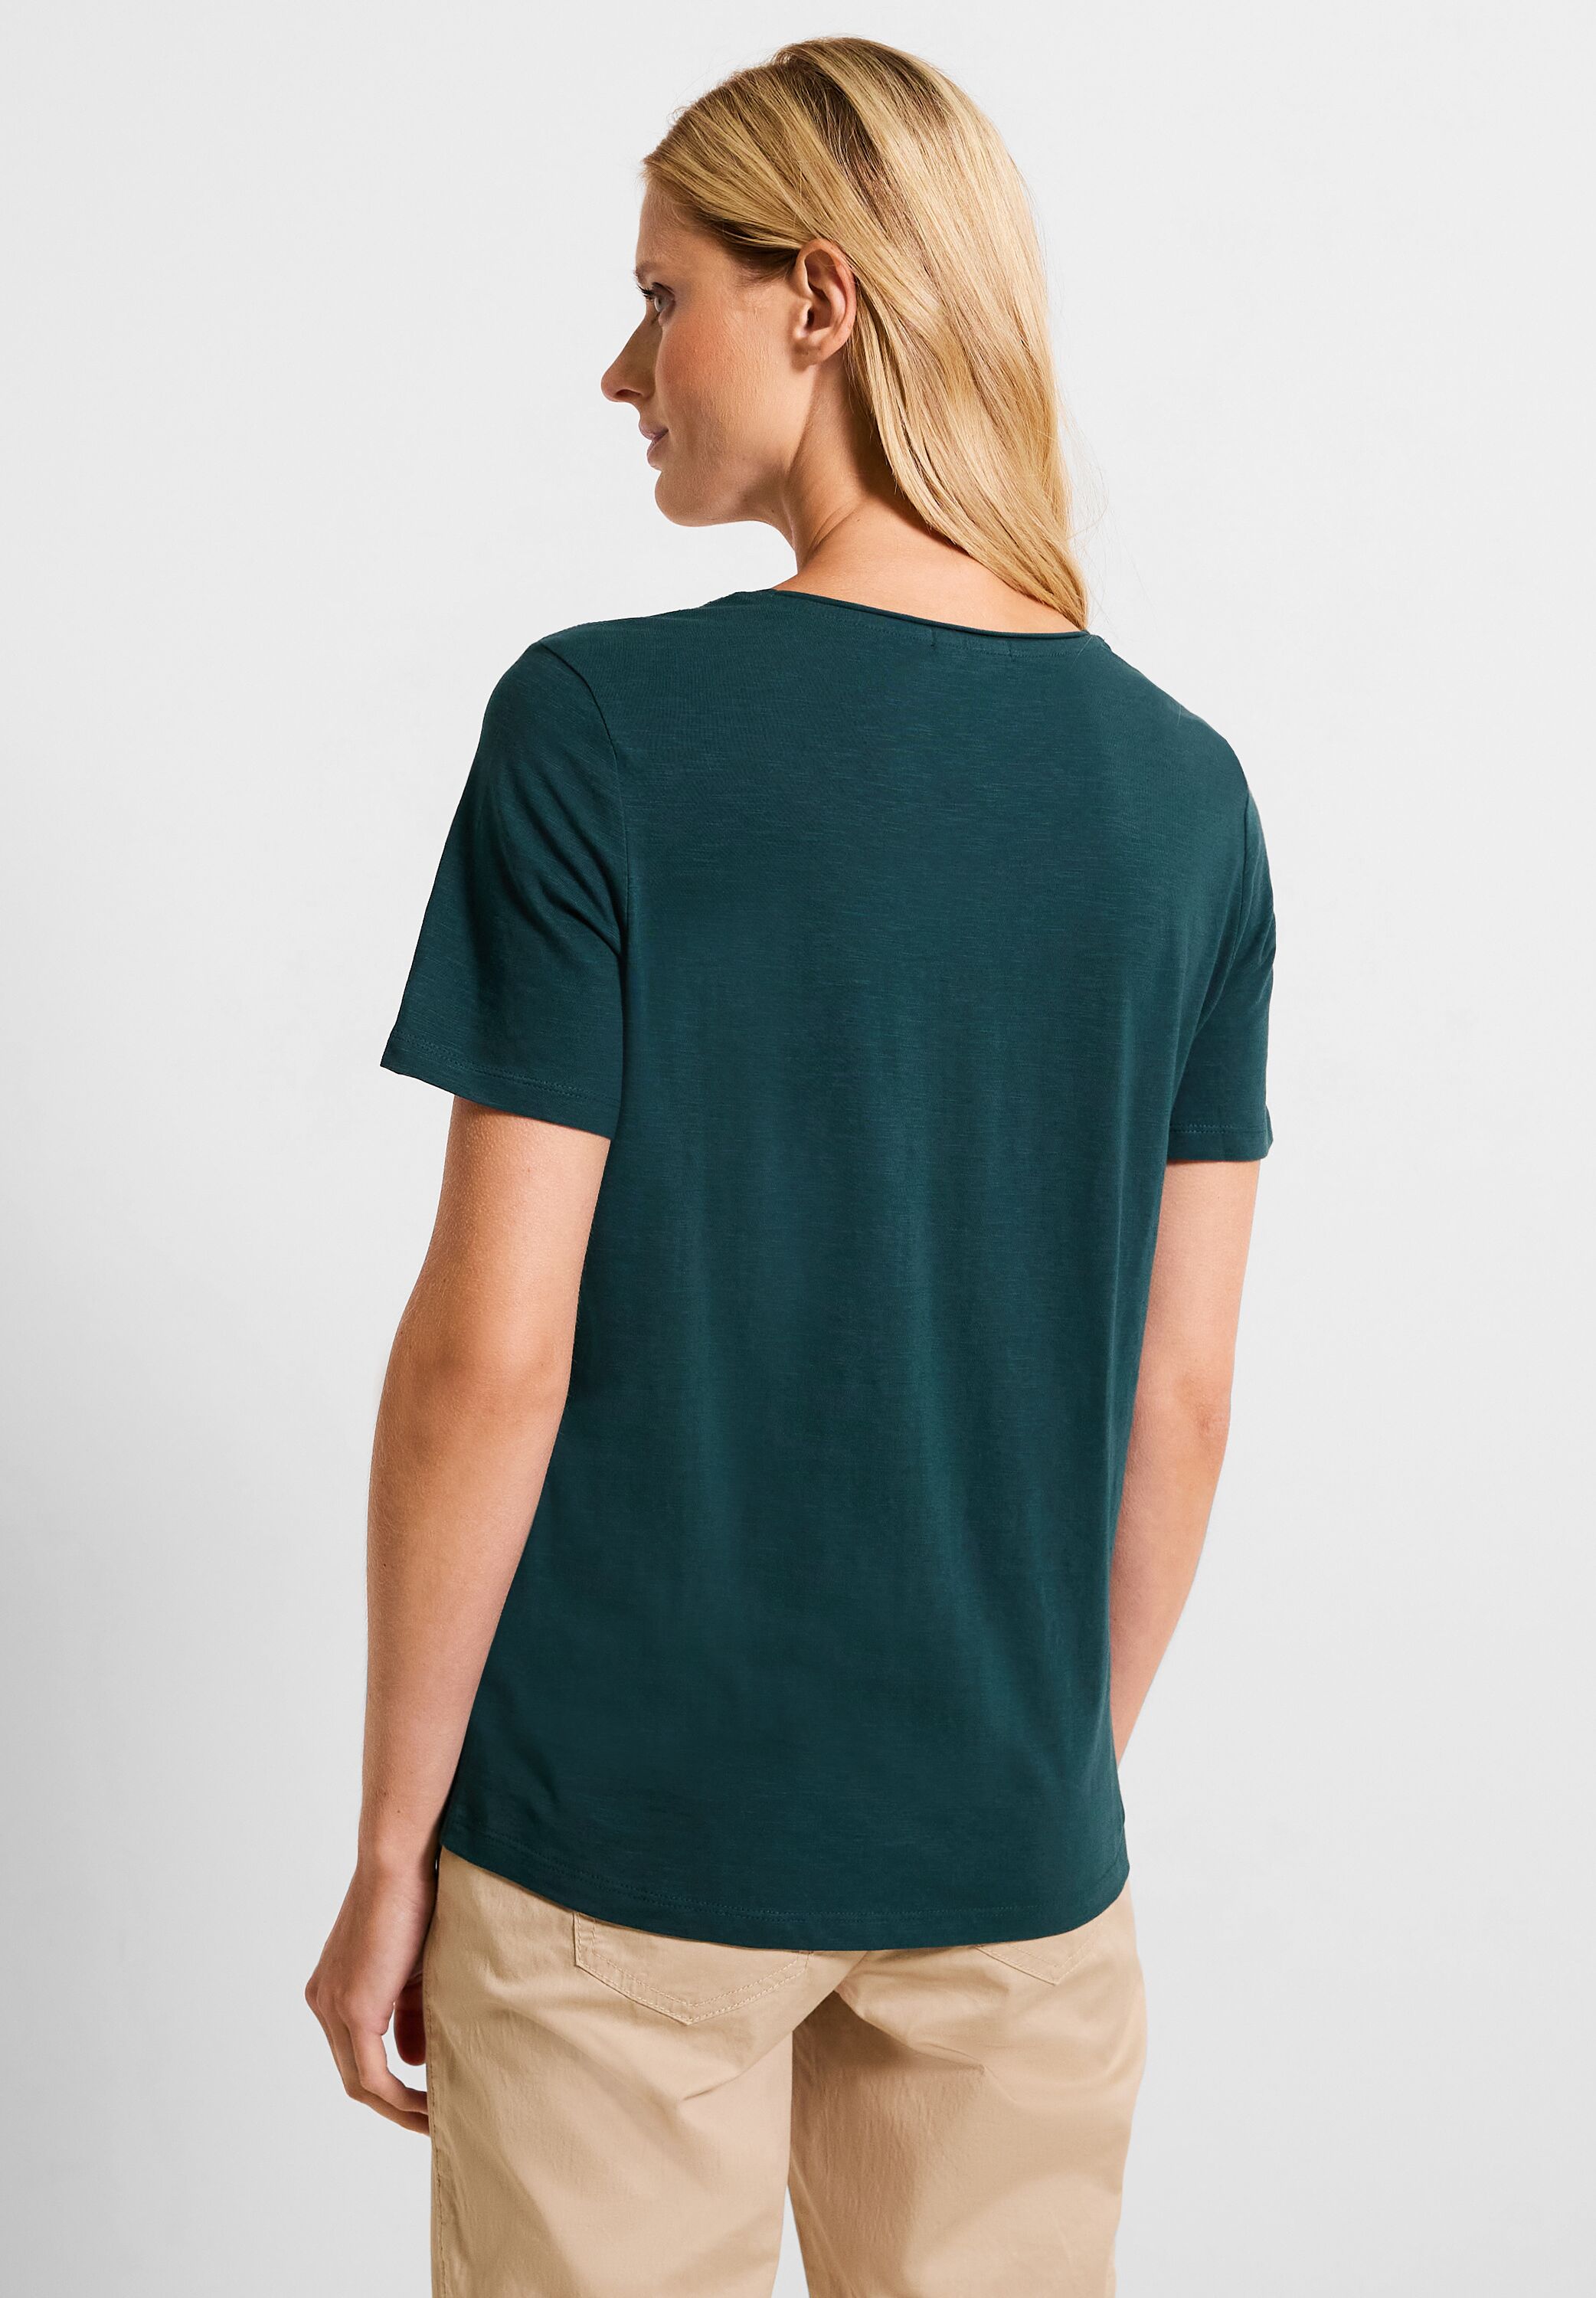 CECIL T-Shirt in Deep Lake Green im SALE reduziert B319372-14926 - CONCEPT  Mode